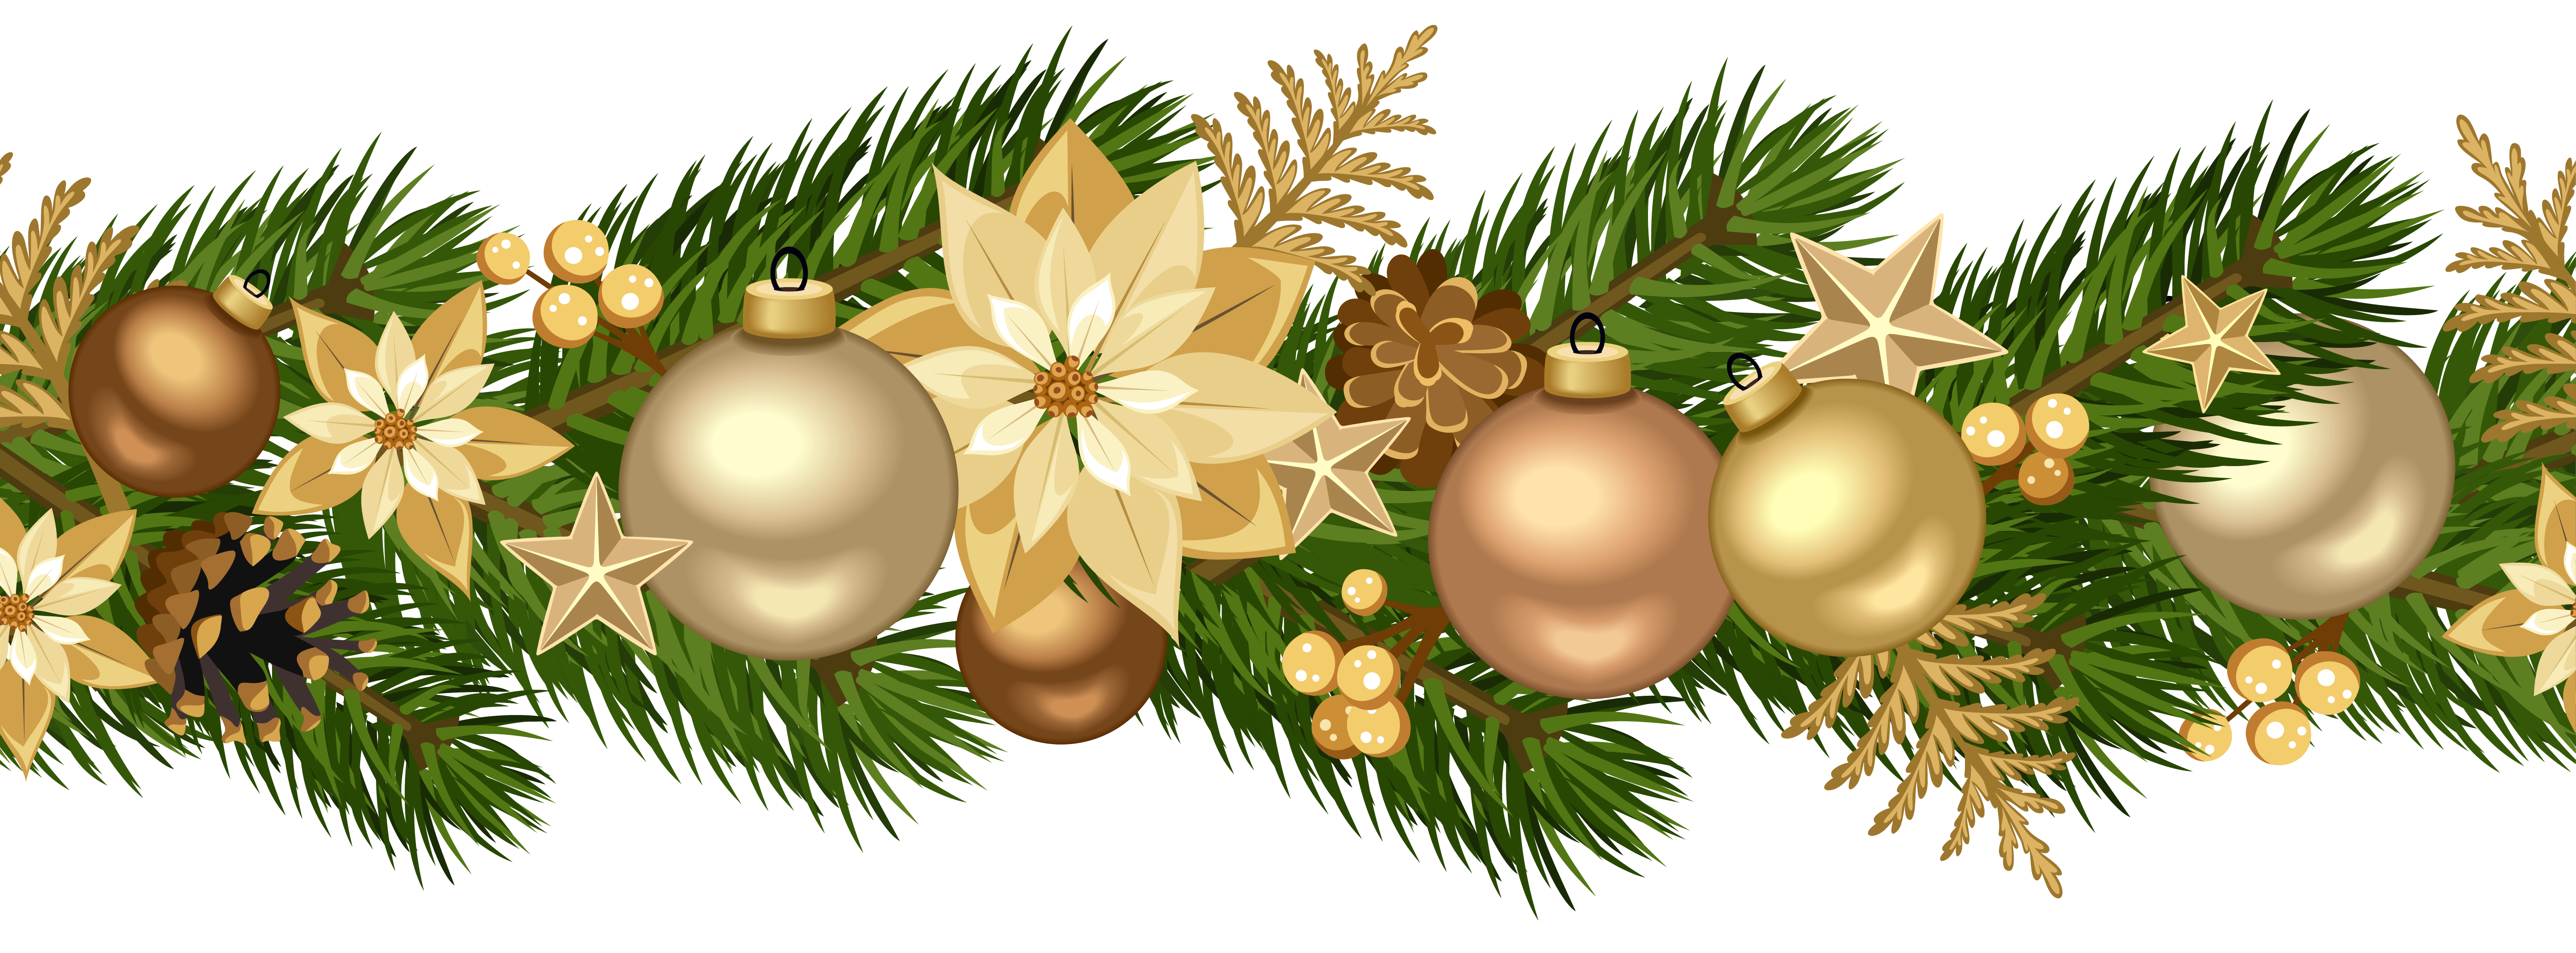 Christmas Decorative Golden Garland PNG Clip Art Image ...